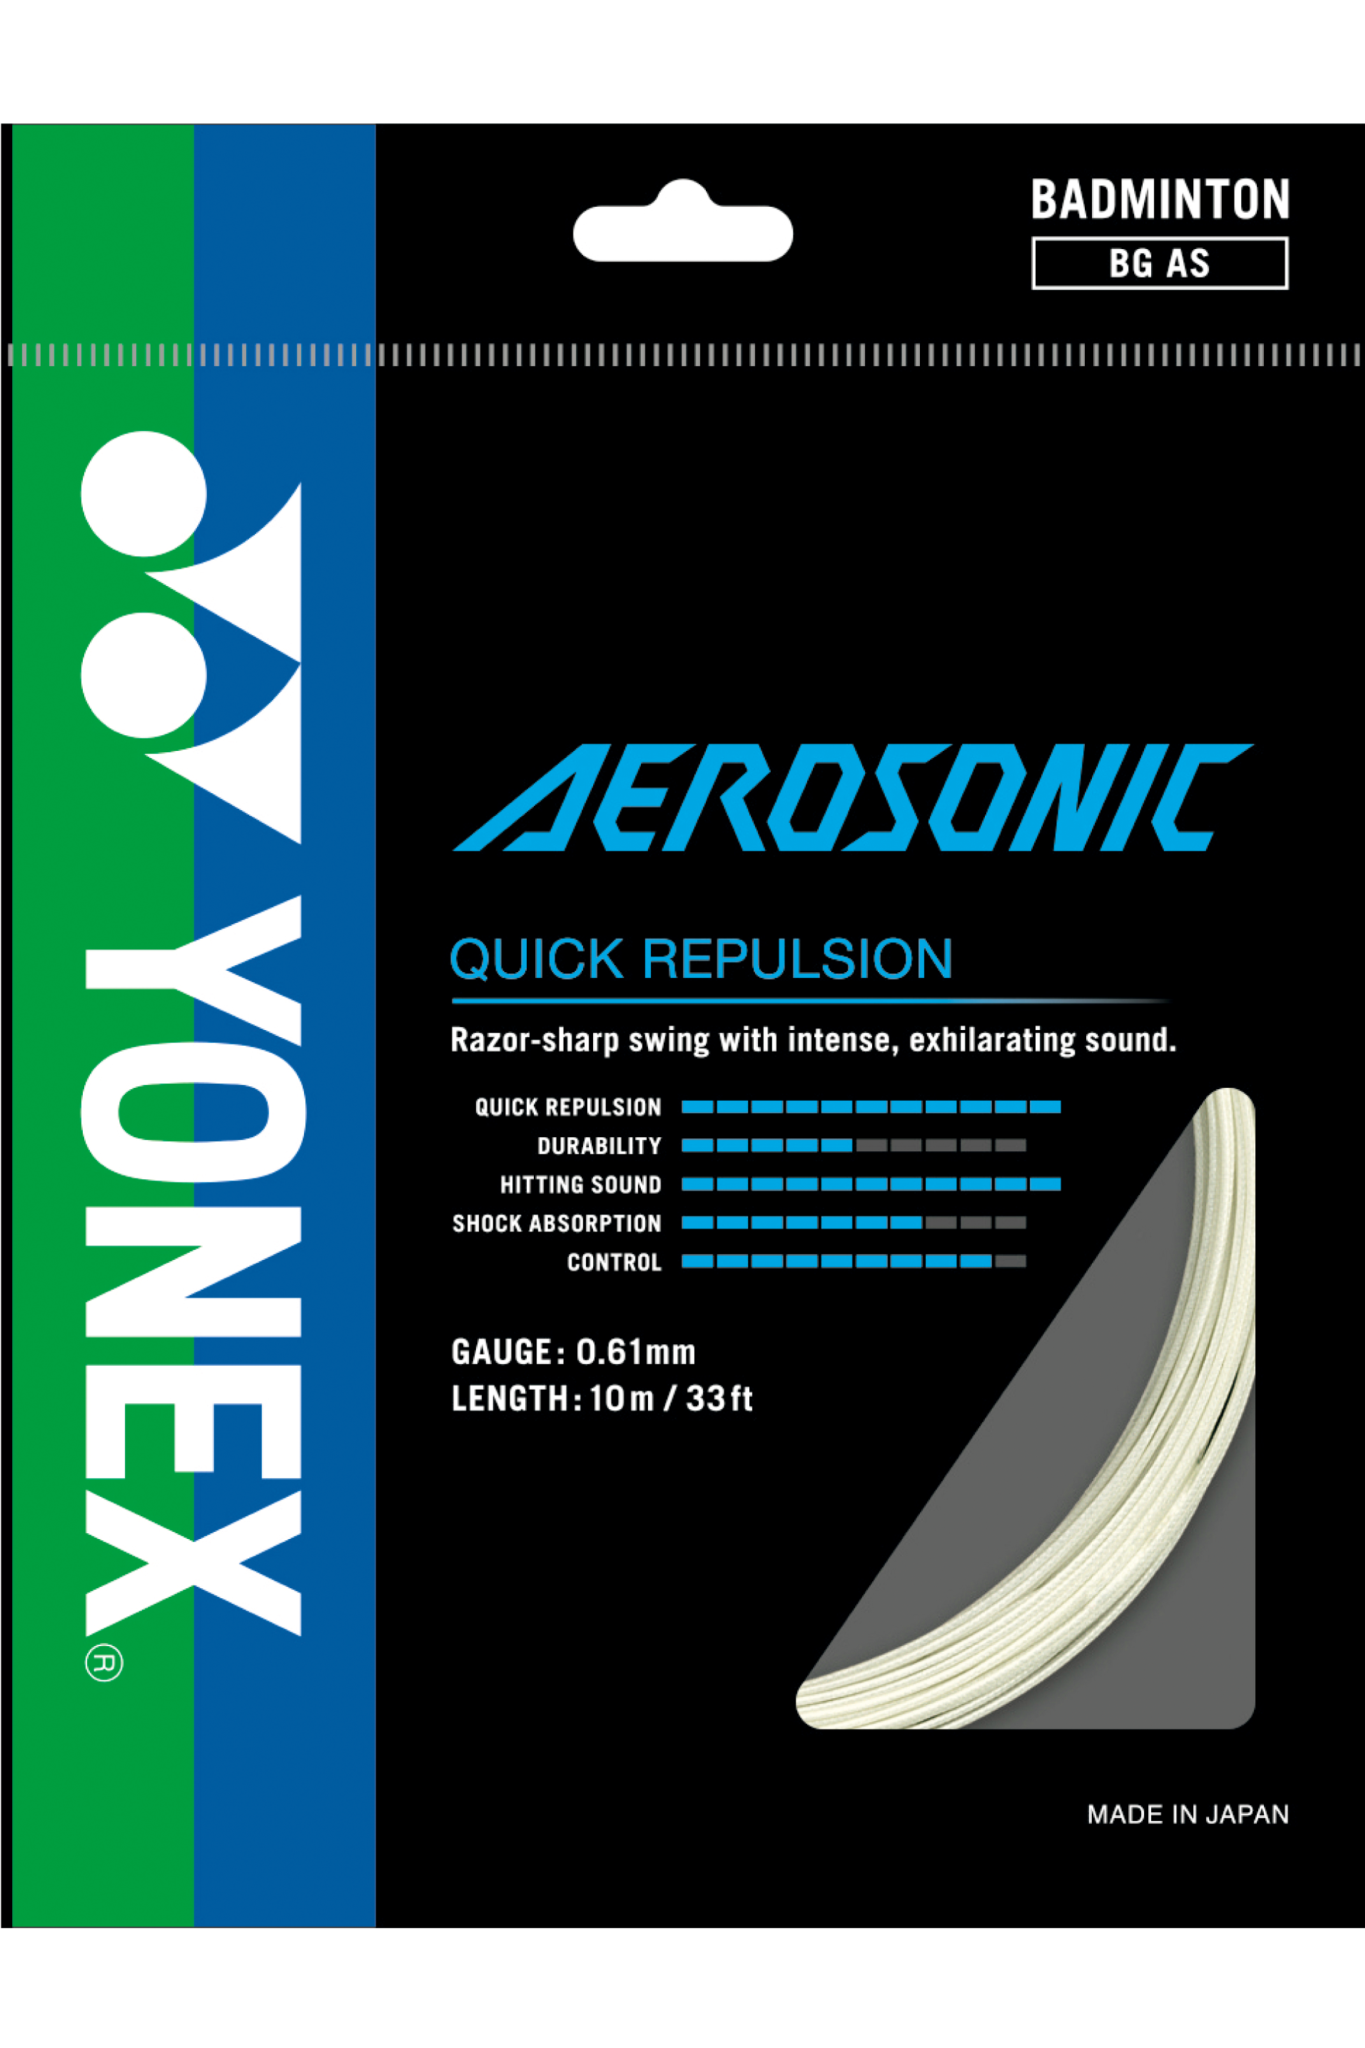 Yonex Badminton String Aerosonic - 10m Set & 200m Reel - Nexus Badminton